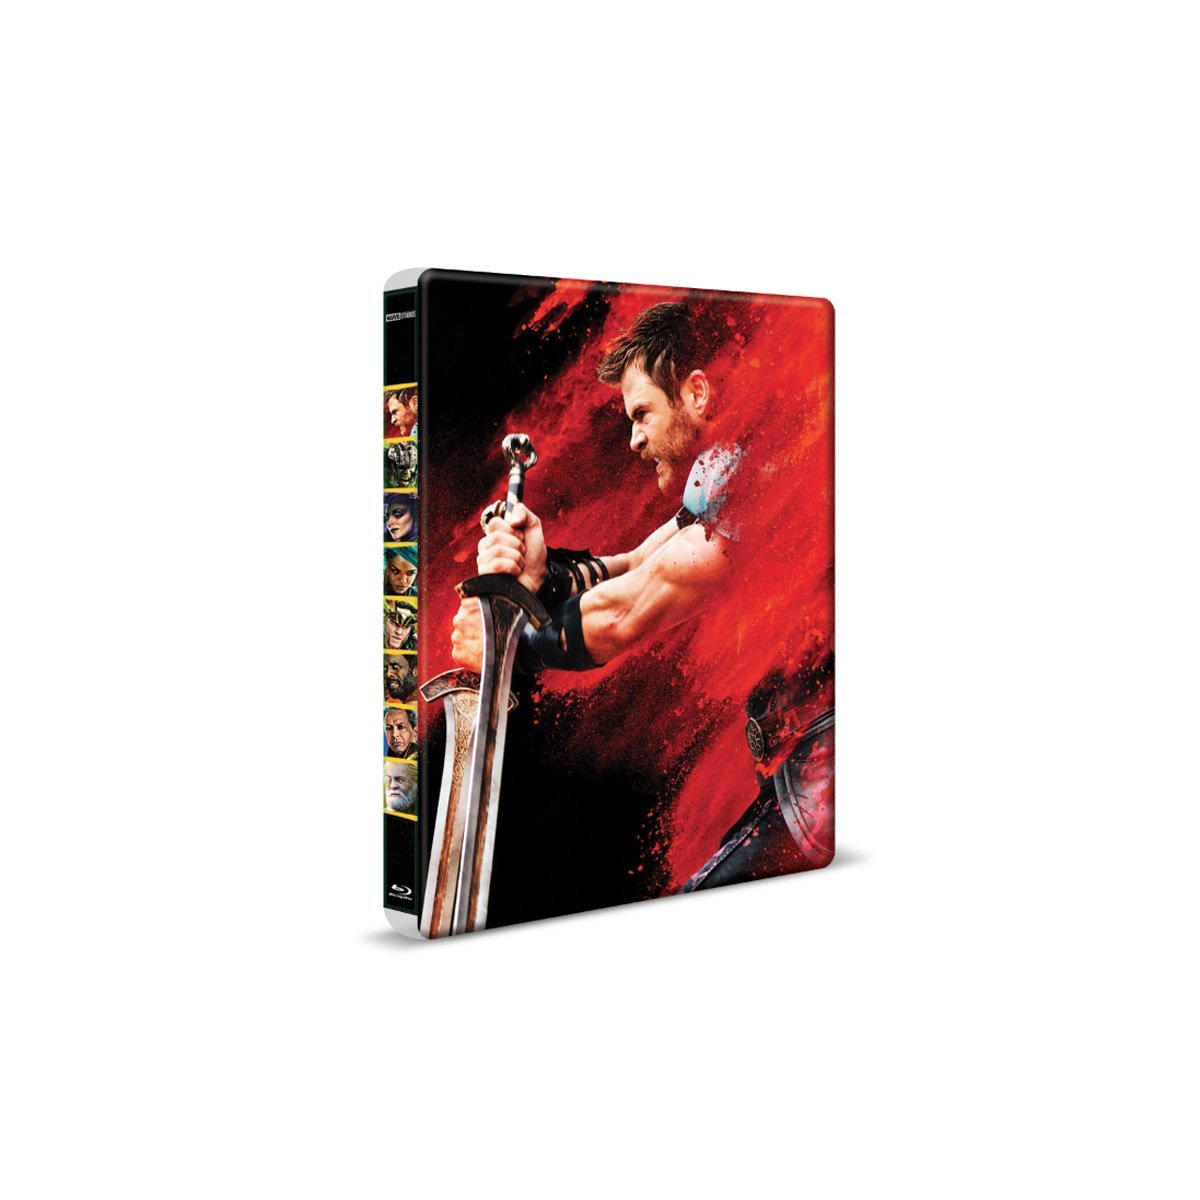 Blu Ray + Dvd Steelbook Thor Ragnarok